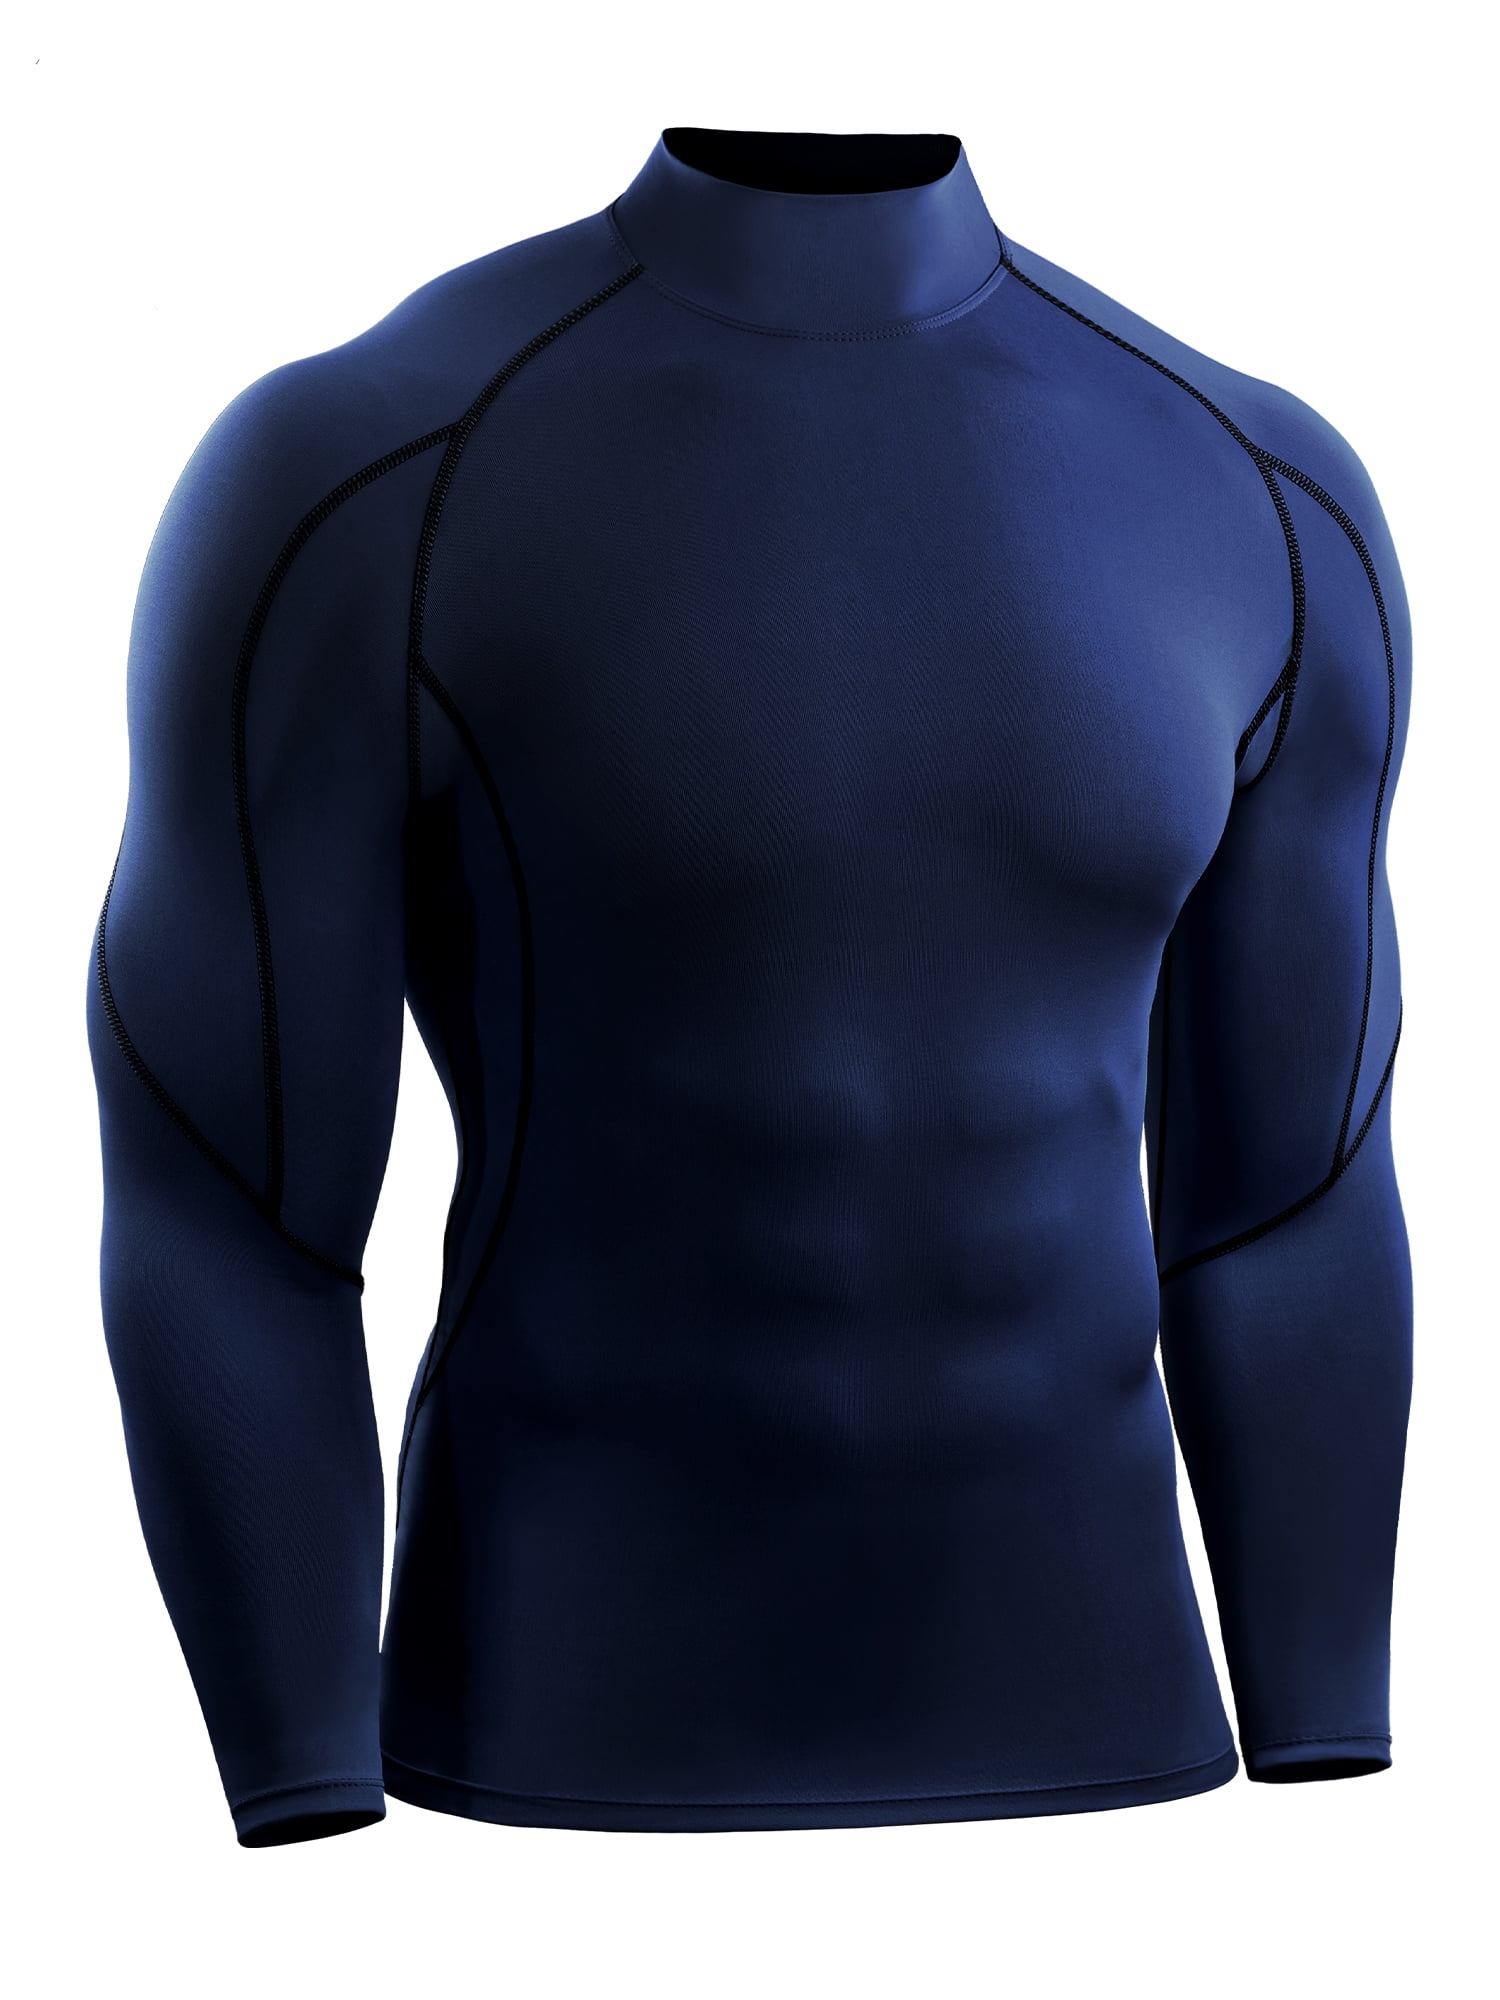 Mens Black Compression Long Shirts Tops New Sports Gym Run Base New Skin 